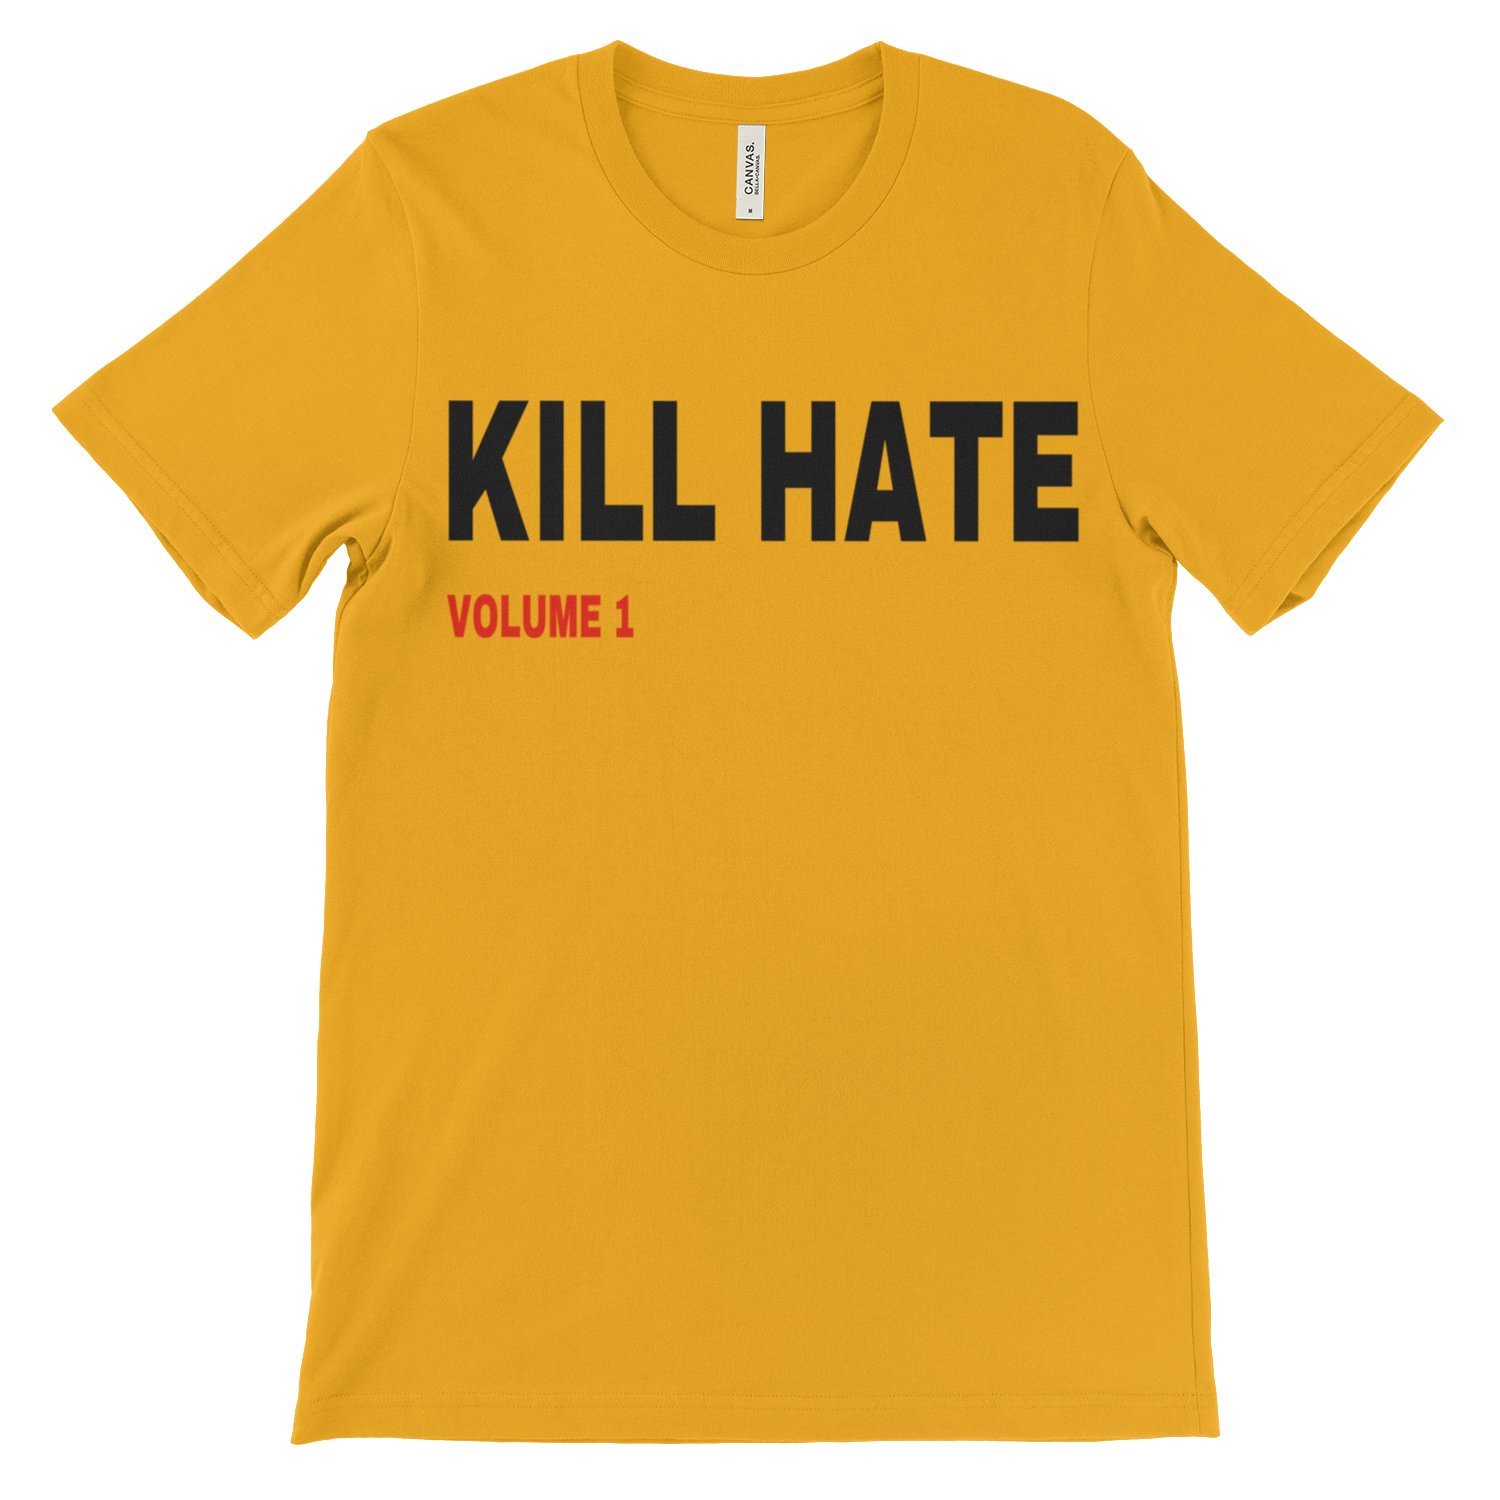 Image of KILL HATE t-shirt